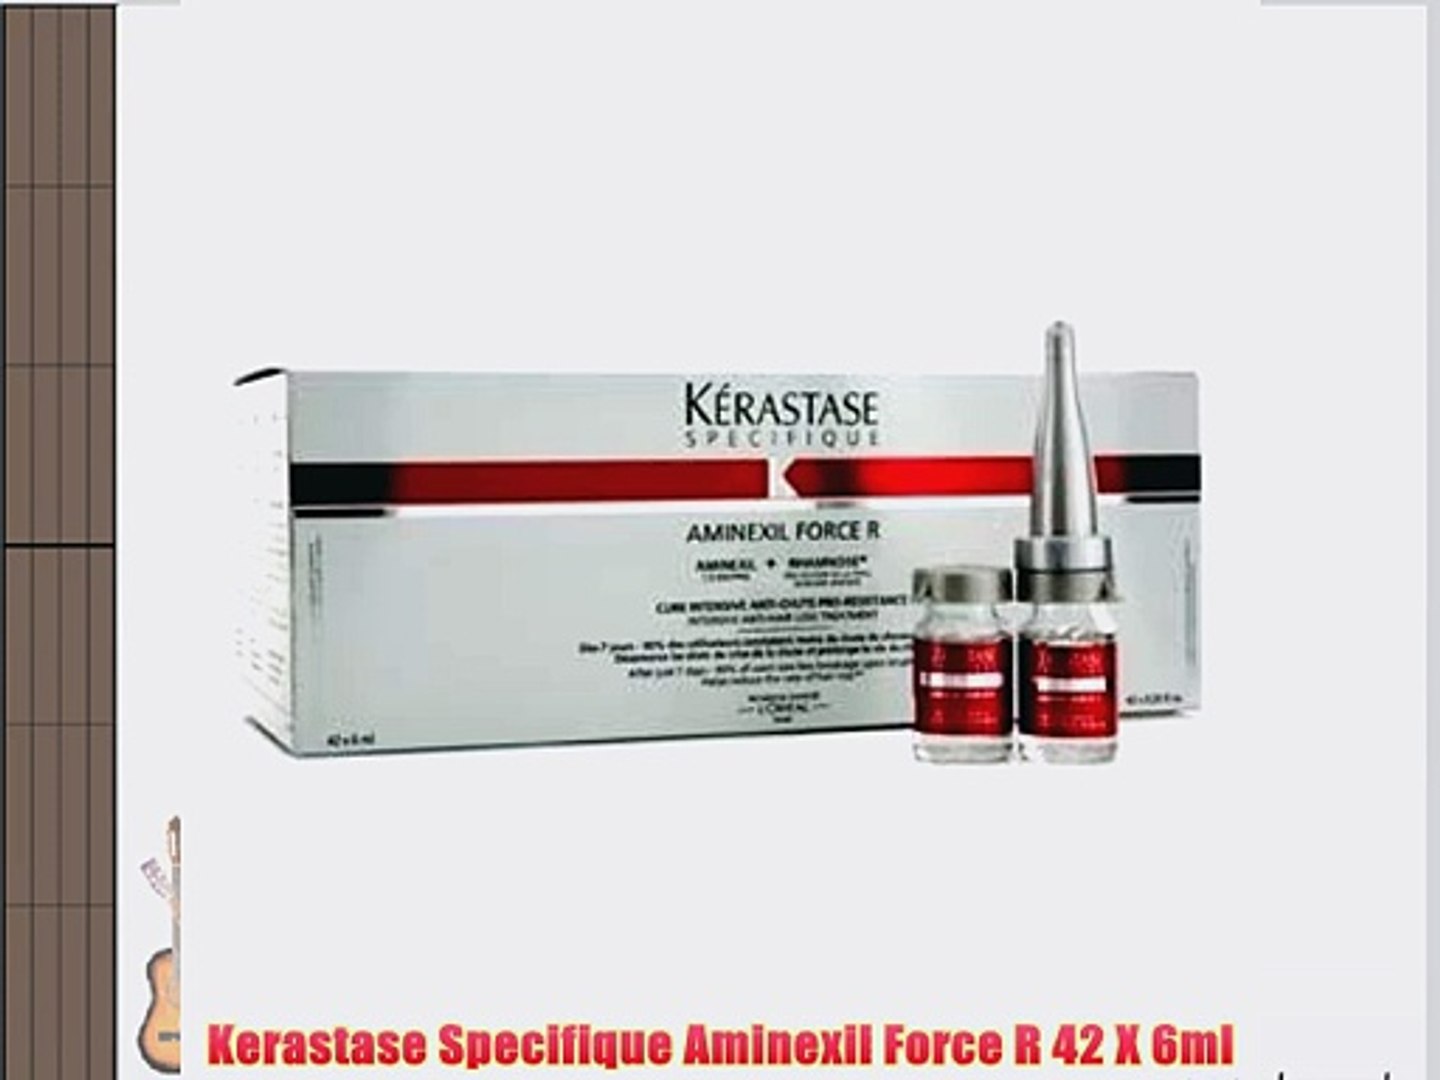 Kerastase Specifique Aminexil Force R 42 X 6ml - video Dailymotion